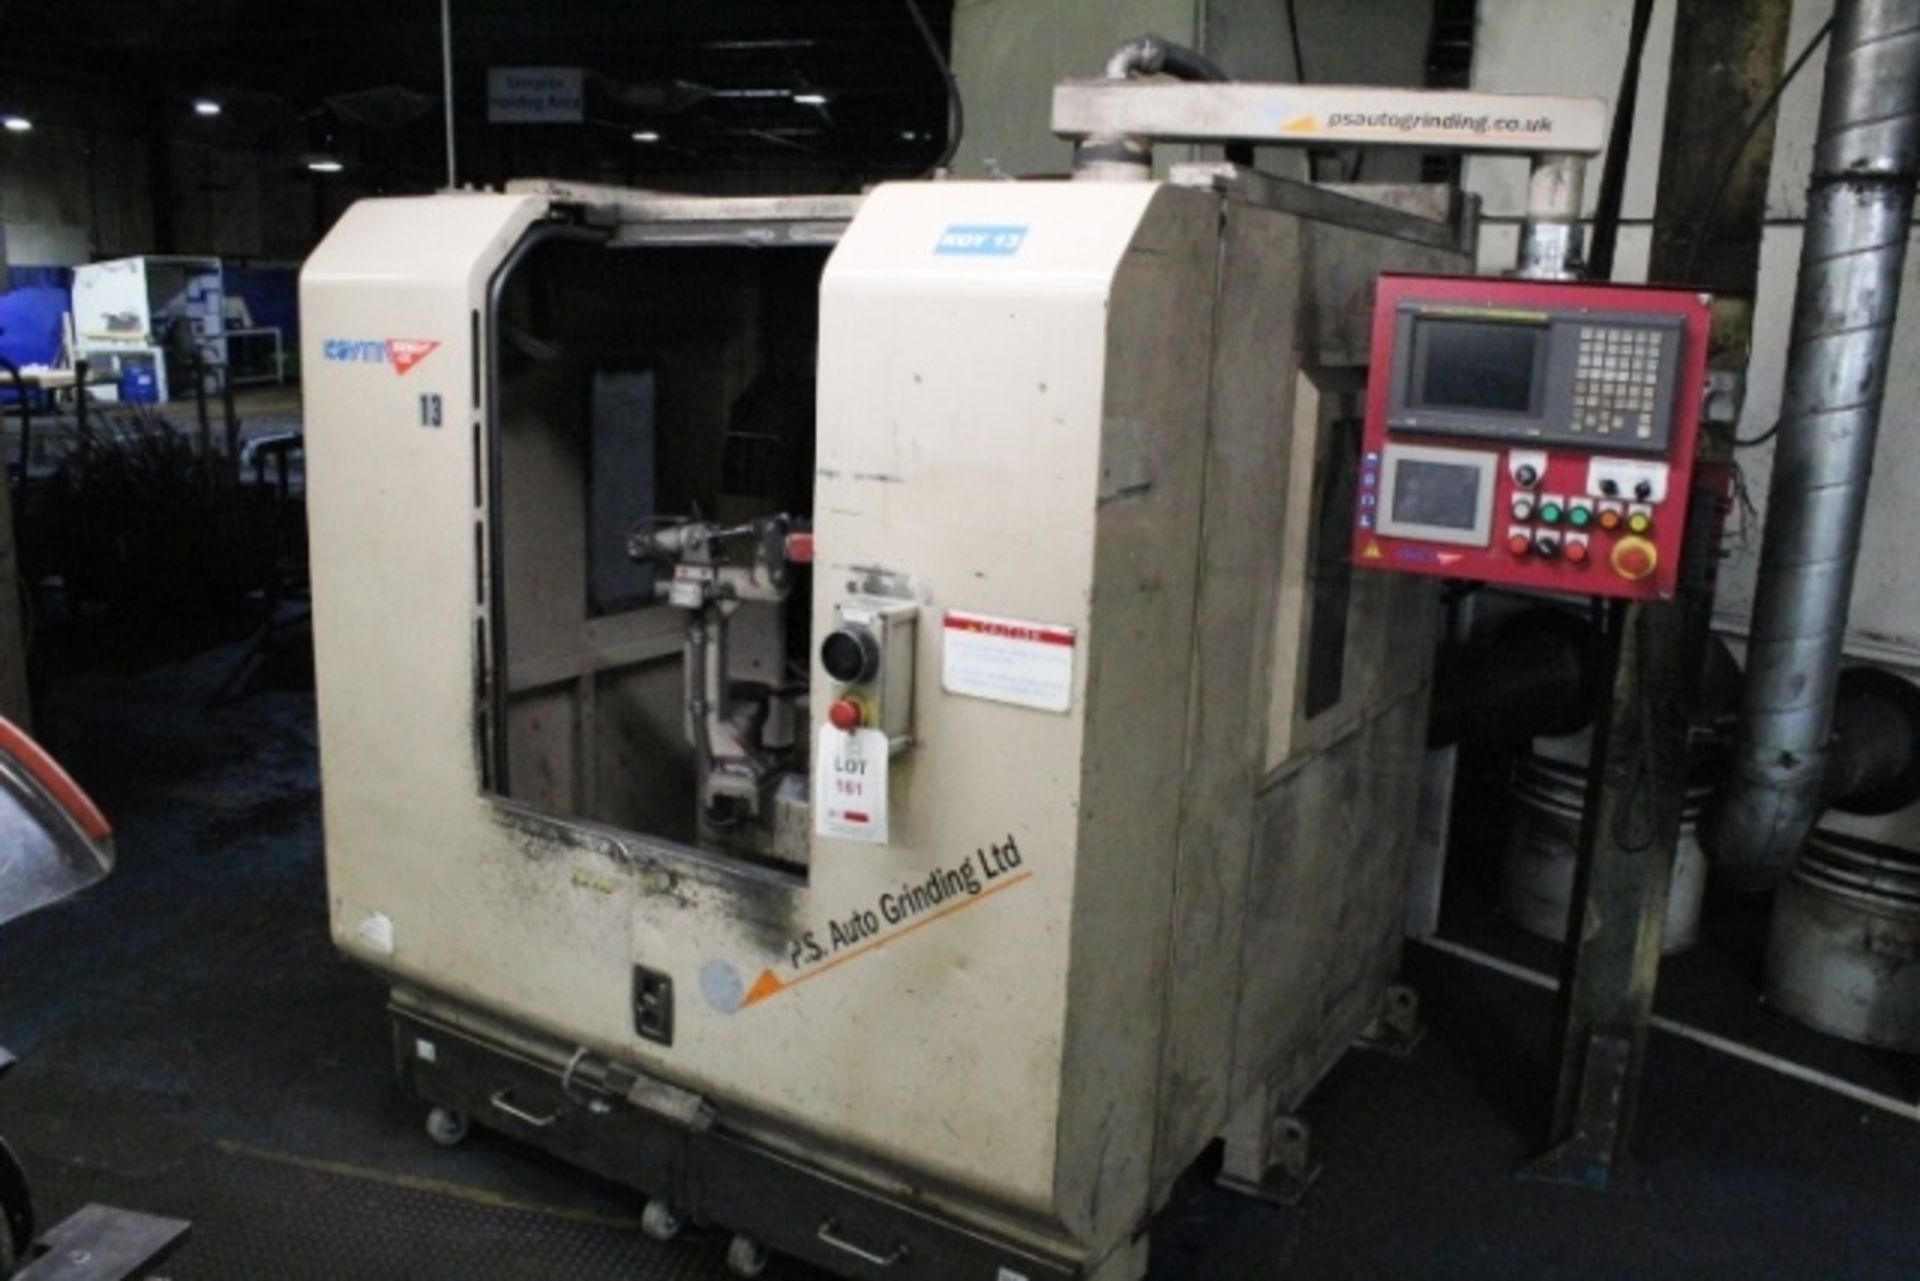 Koyama Barinder 400 automatic twin head grinding machine with rotary arm, model X6-FDH22R-443GRS,